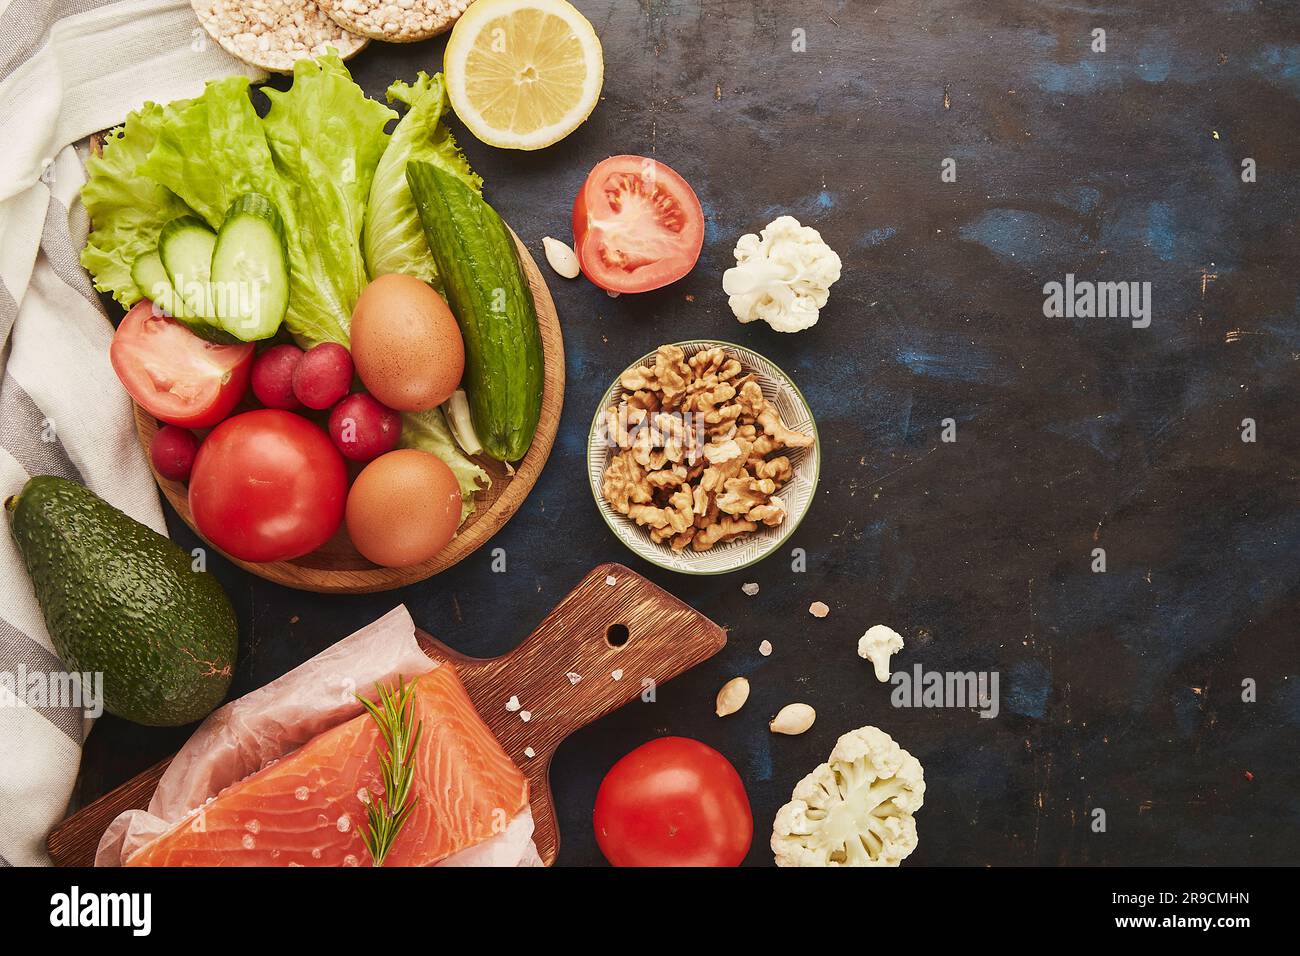 Fodmap Mediterranean diet with copy space. Healthy low fodmap ingredients - vegetables, fruits, nuts, greens, avocado. Flat lay Stock Photo